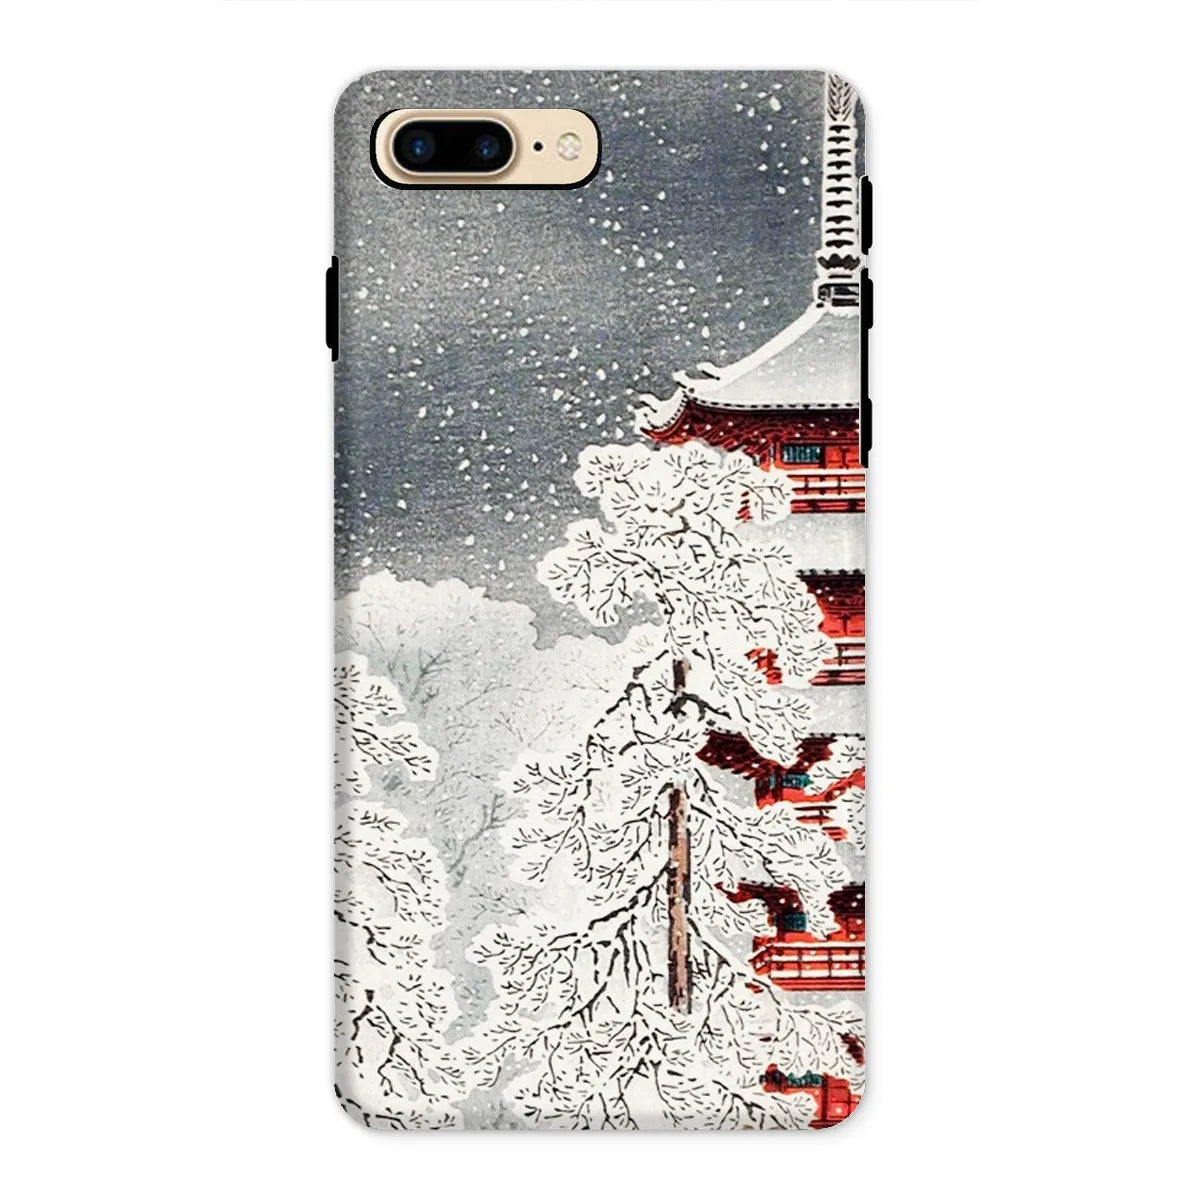 Snow At Asakusa - Shin-hanga Phone Case - Takahashi Shōtei - Iphone 8 Plus / Matte - Mobile Phone Cases - Aesthetic Art